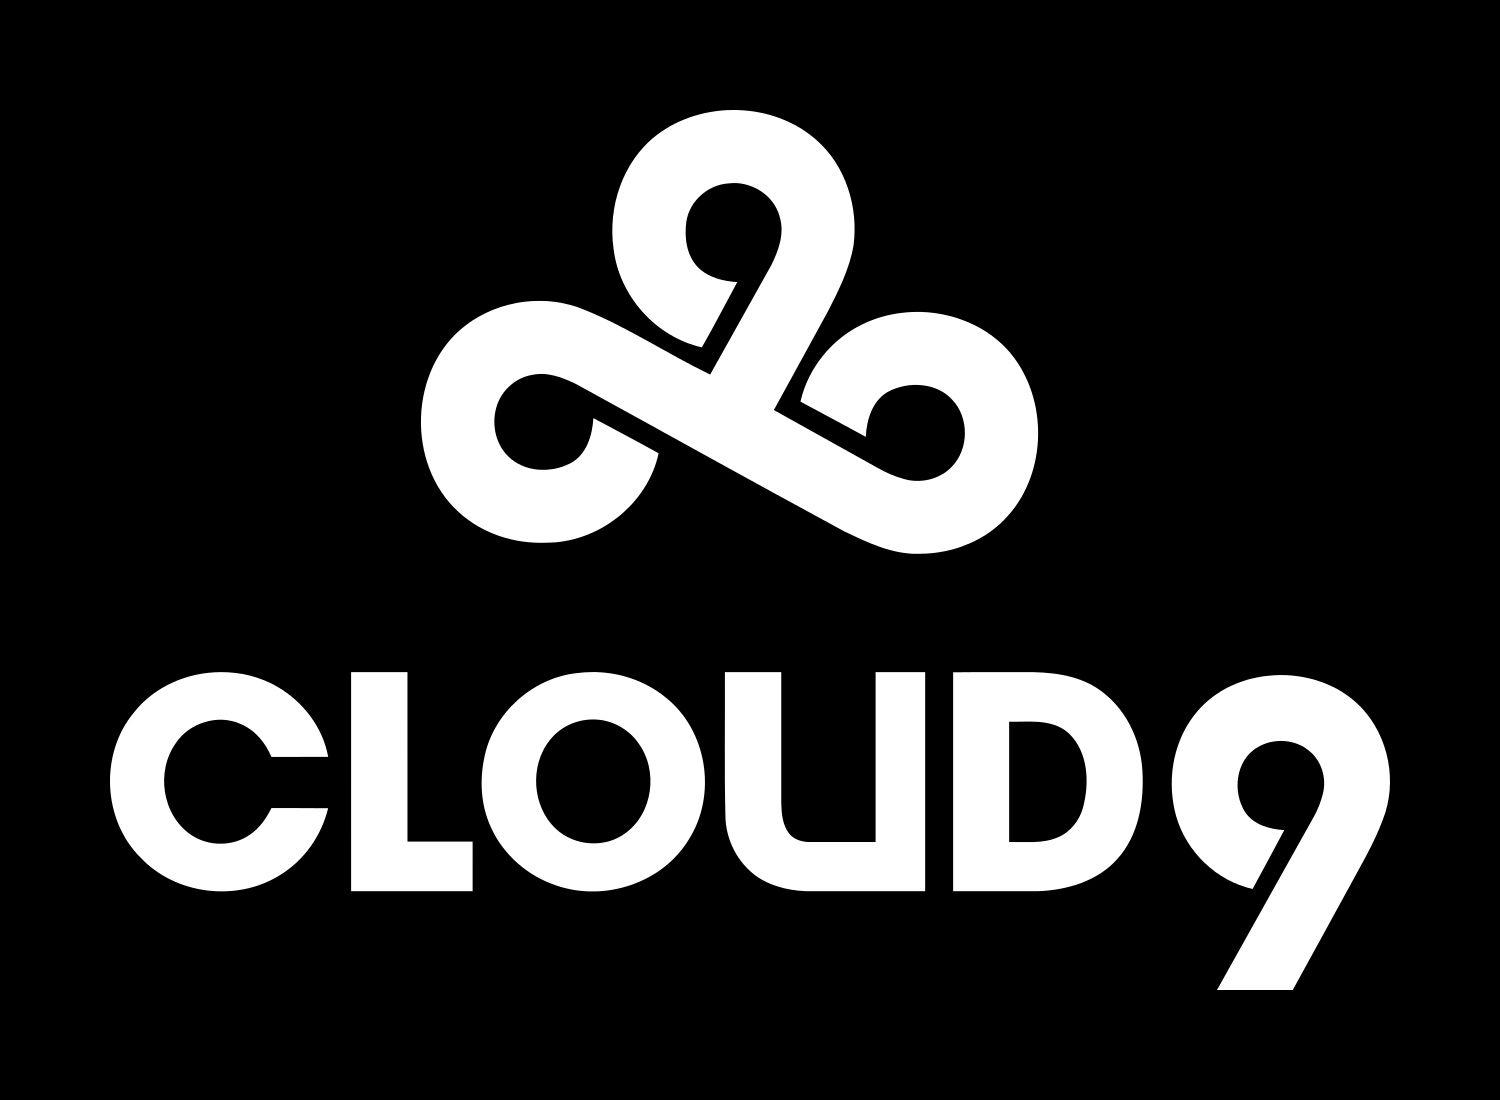 Black Cloud Logo - Cloud 9 Logo, Cloud 9 Symbol, Meaning, History and Evolution